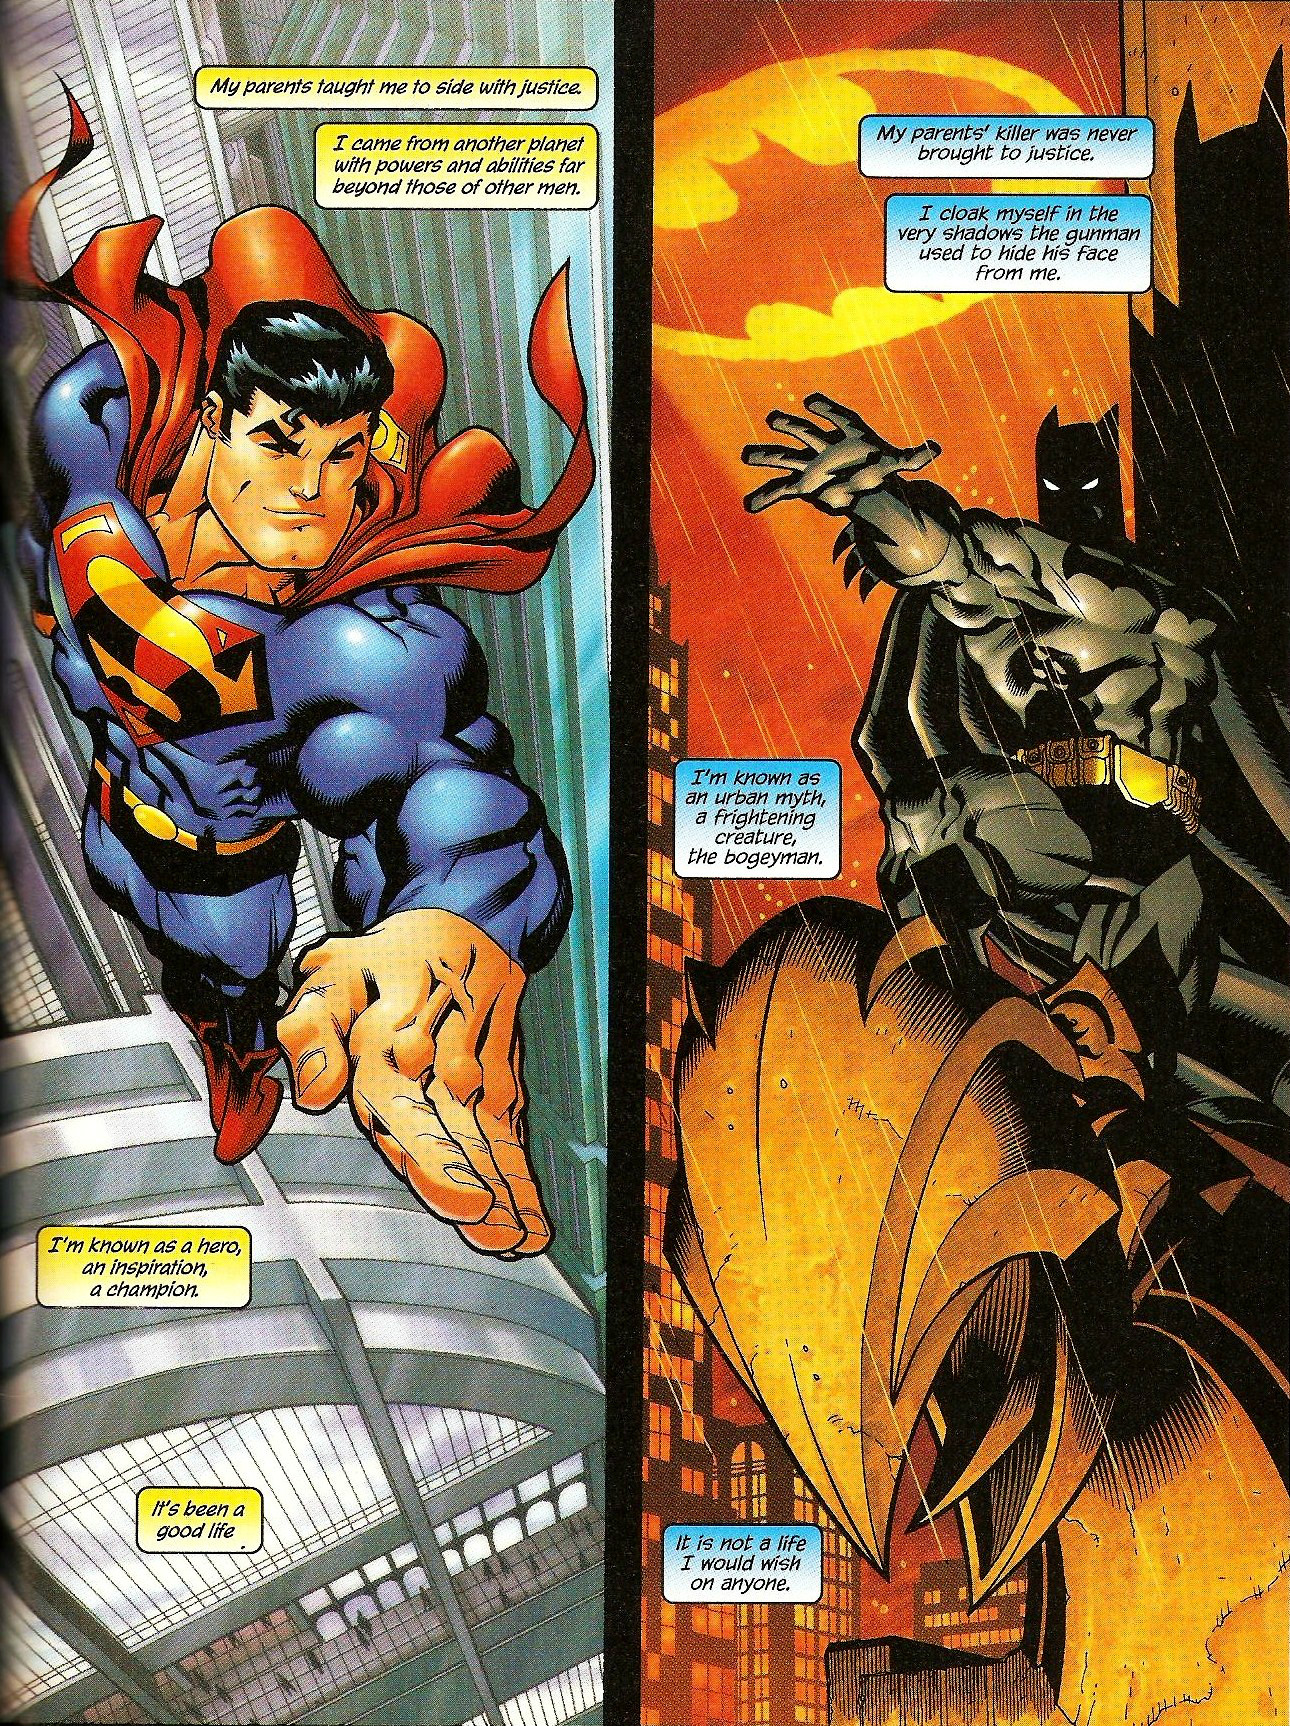 From Superman/Batman #1 (2003)